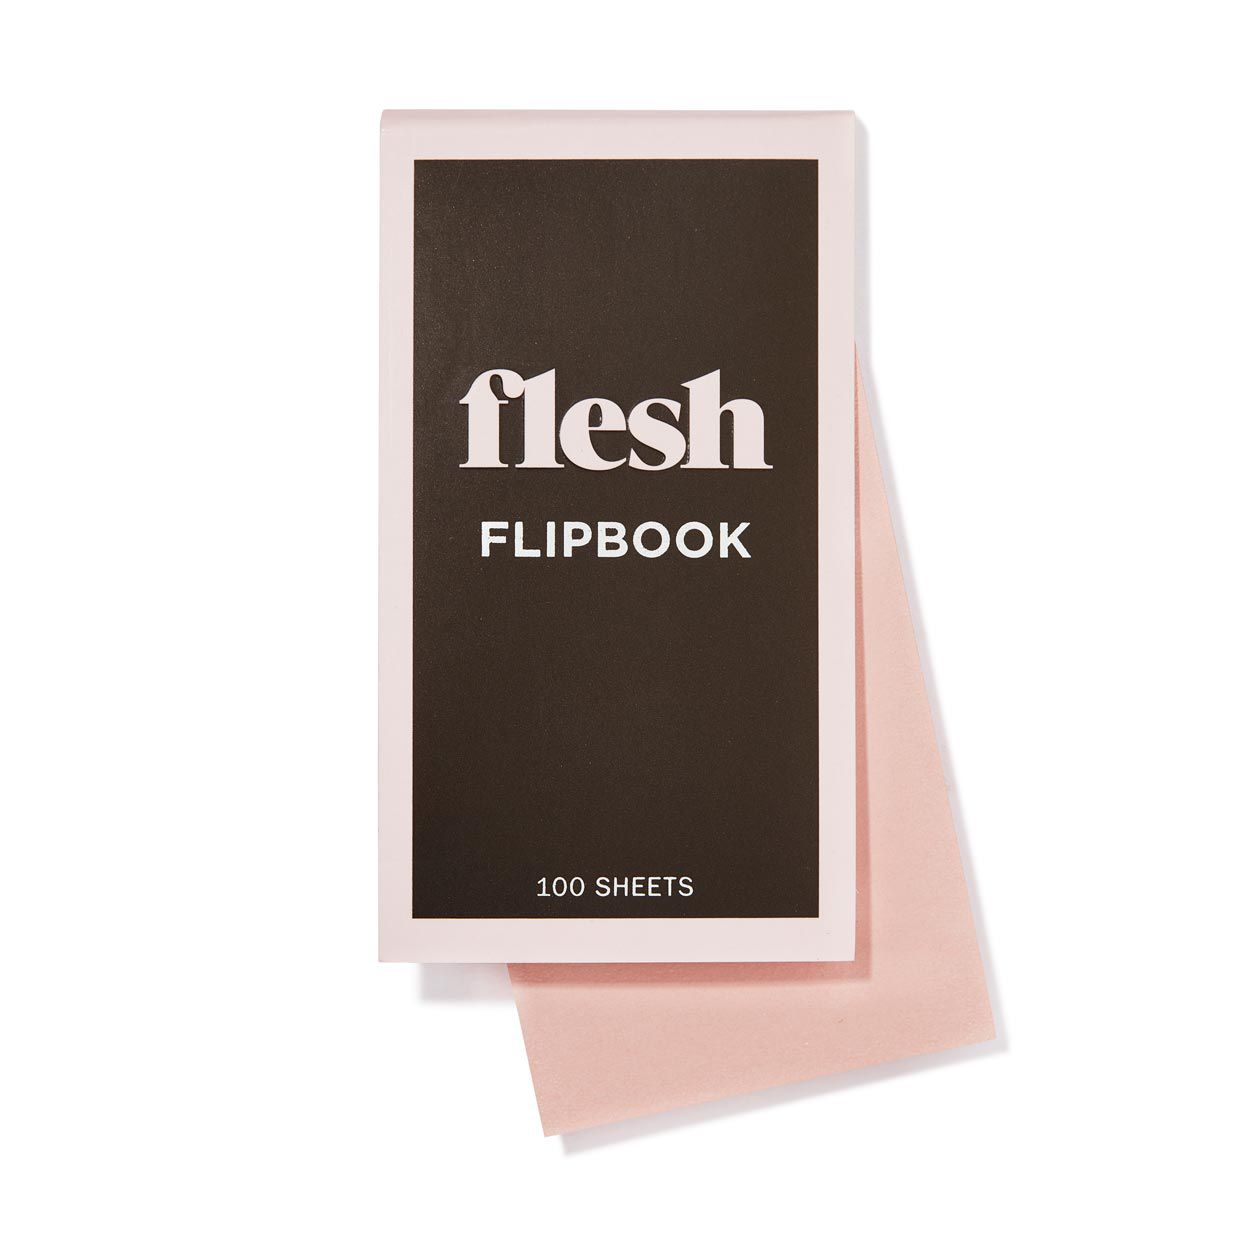 Flesh Flipbook